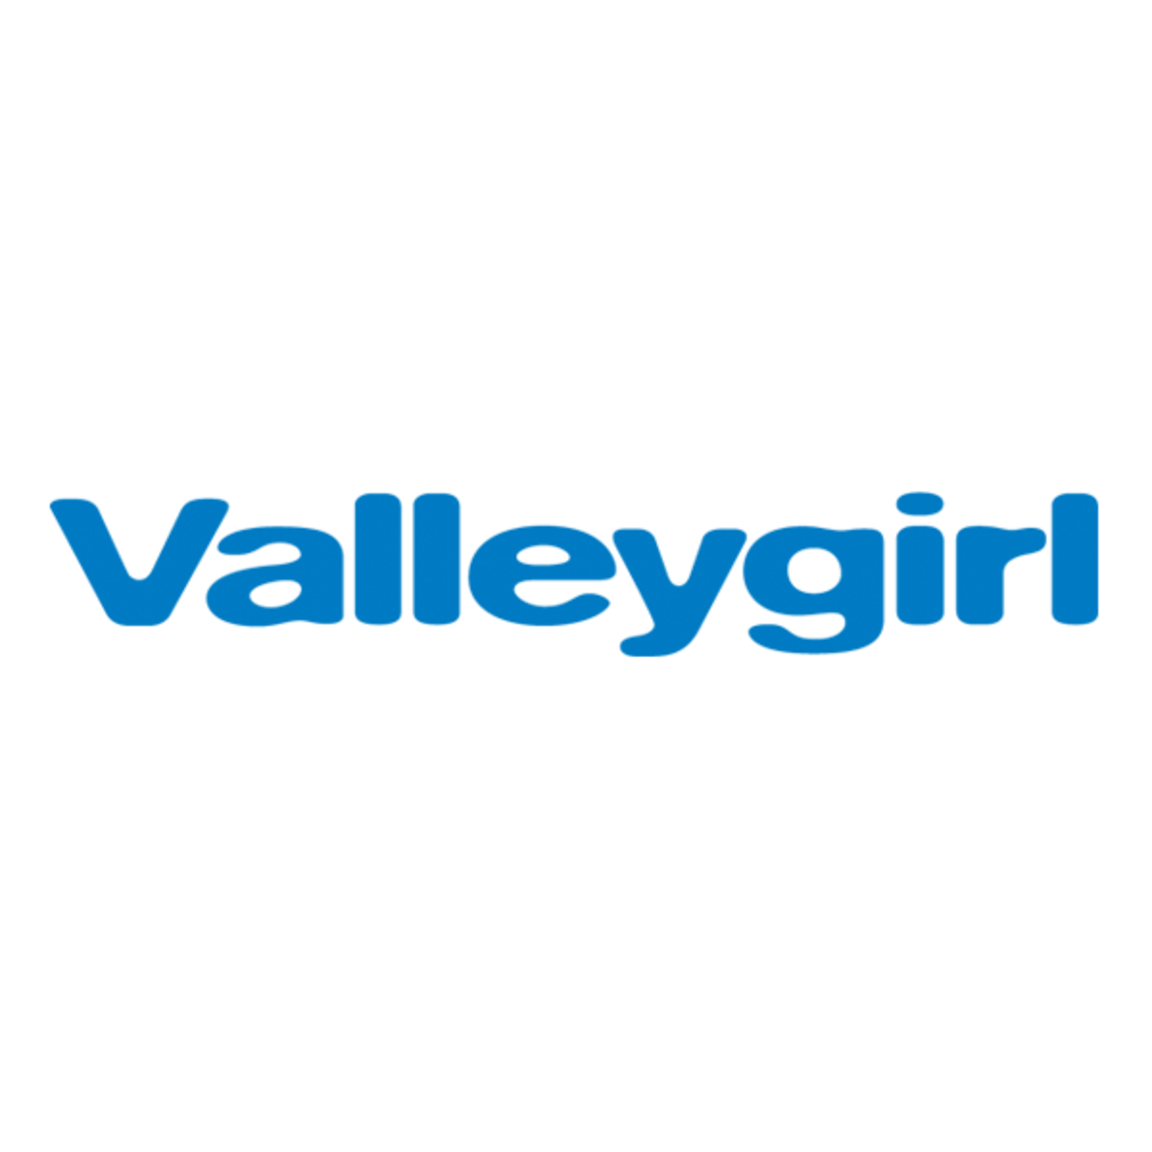 Valleygirl.png